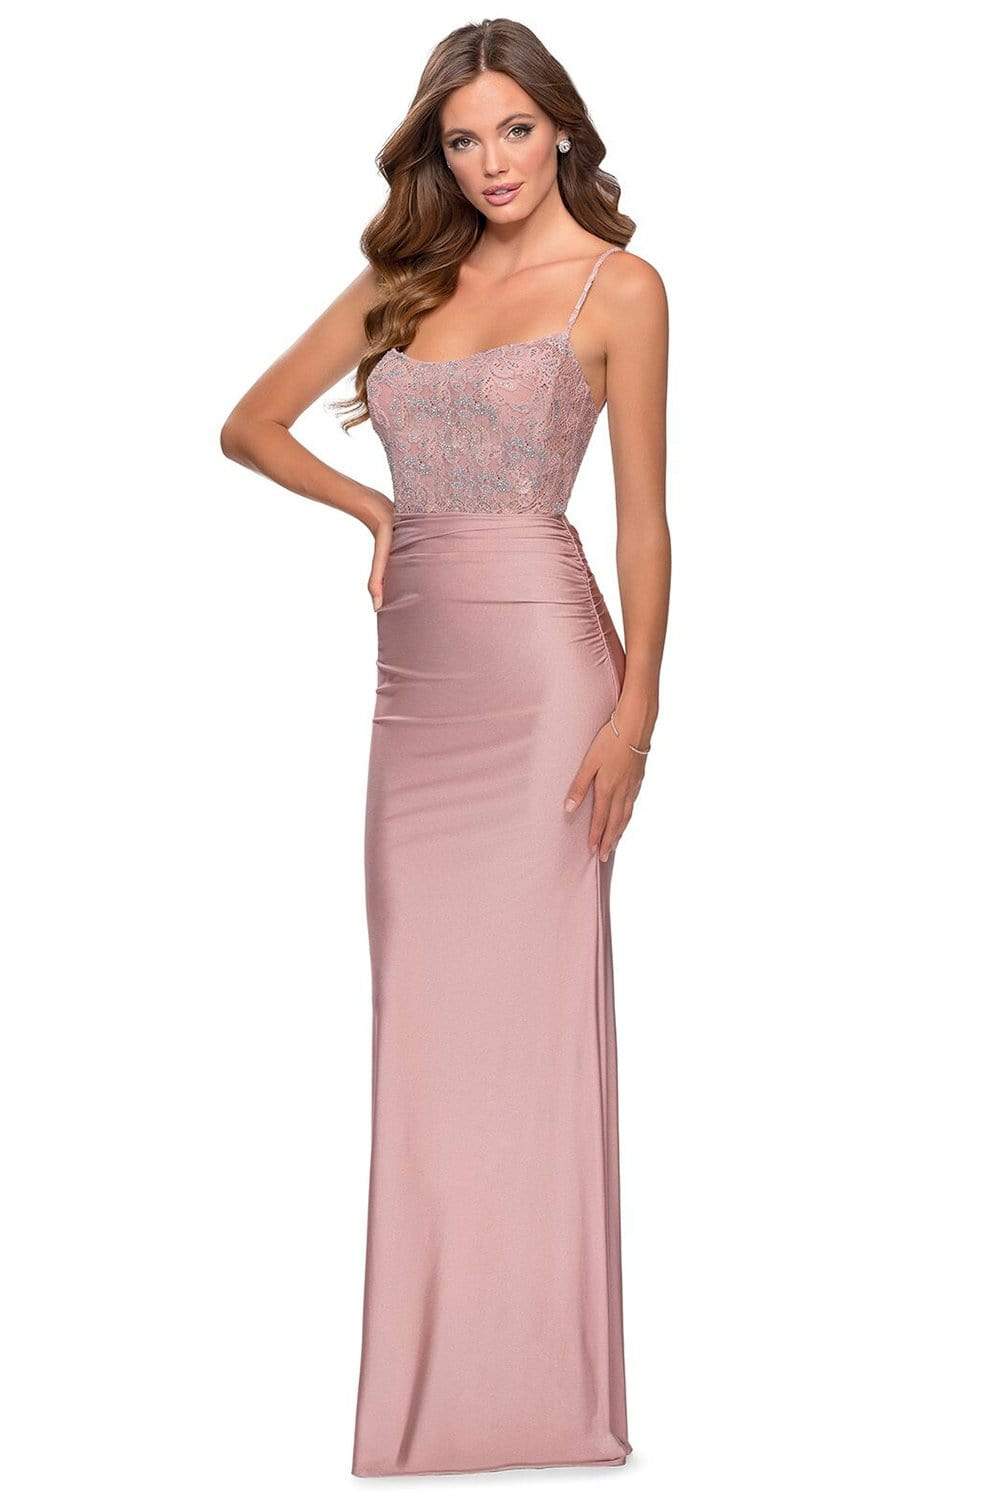 La Femme - 28558 Scoop Neck Lace Sheath Simple Prom Dress
